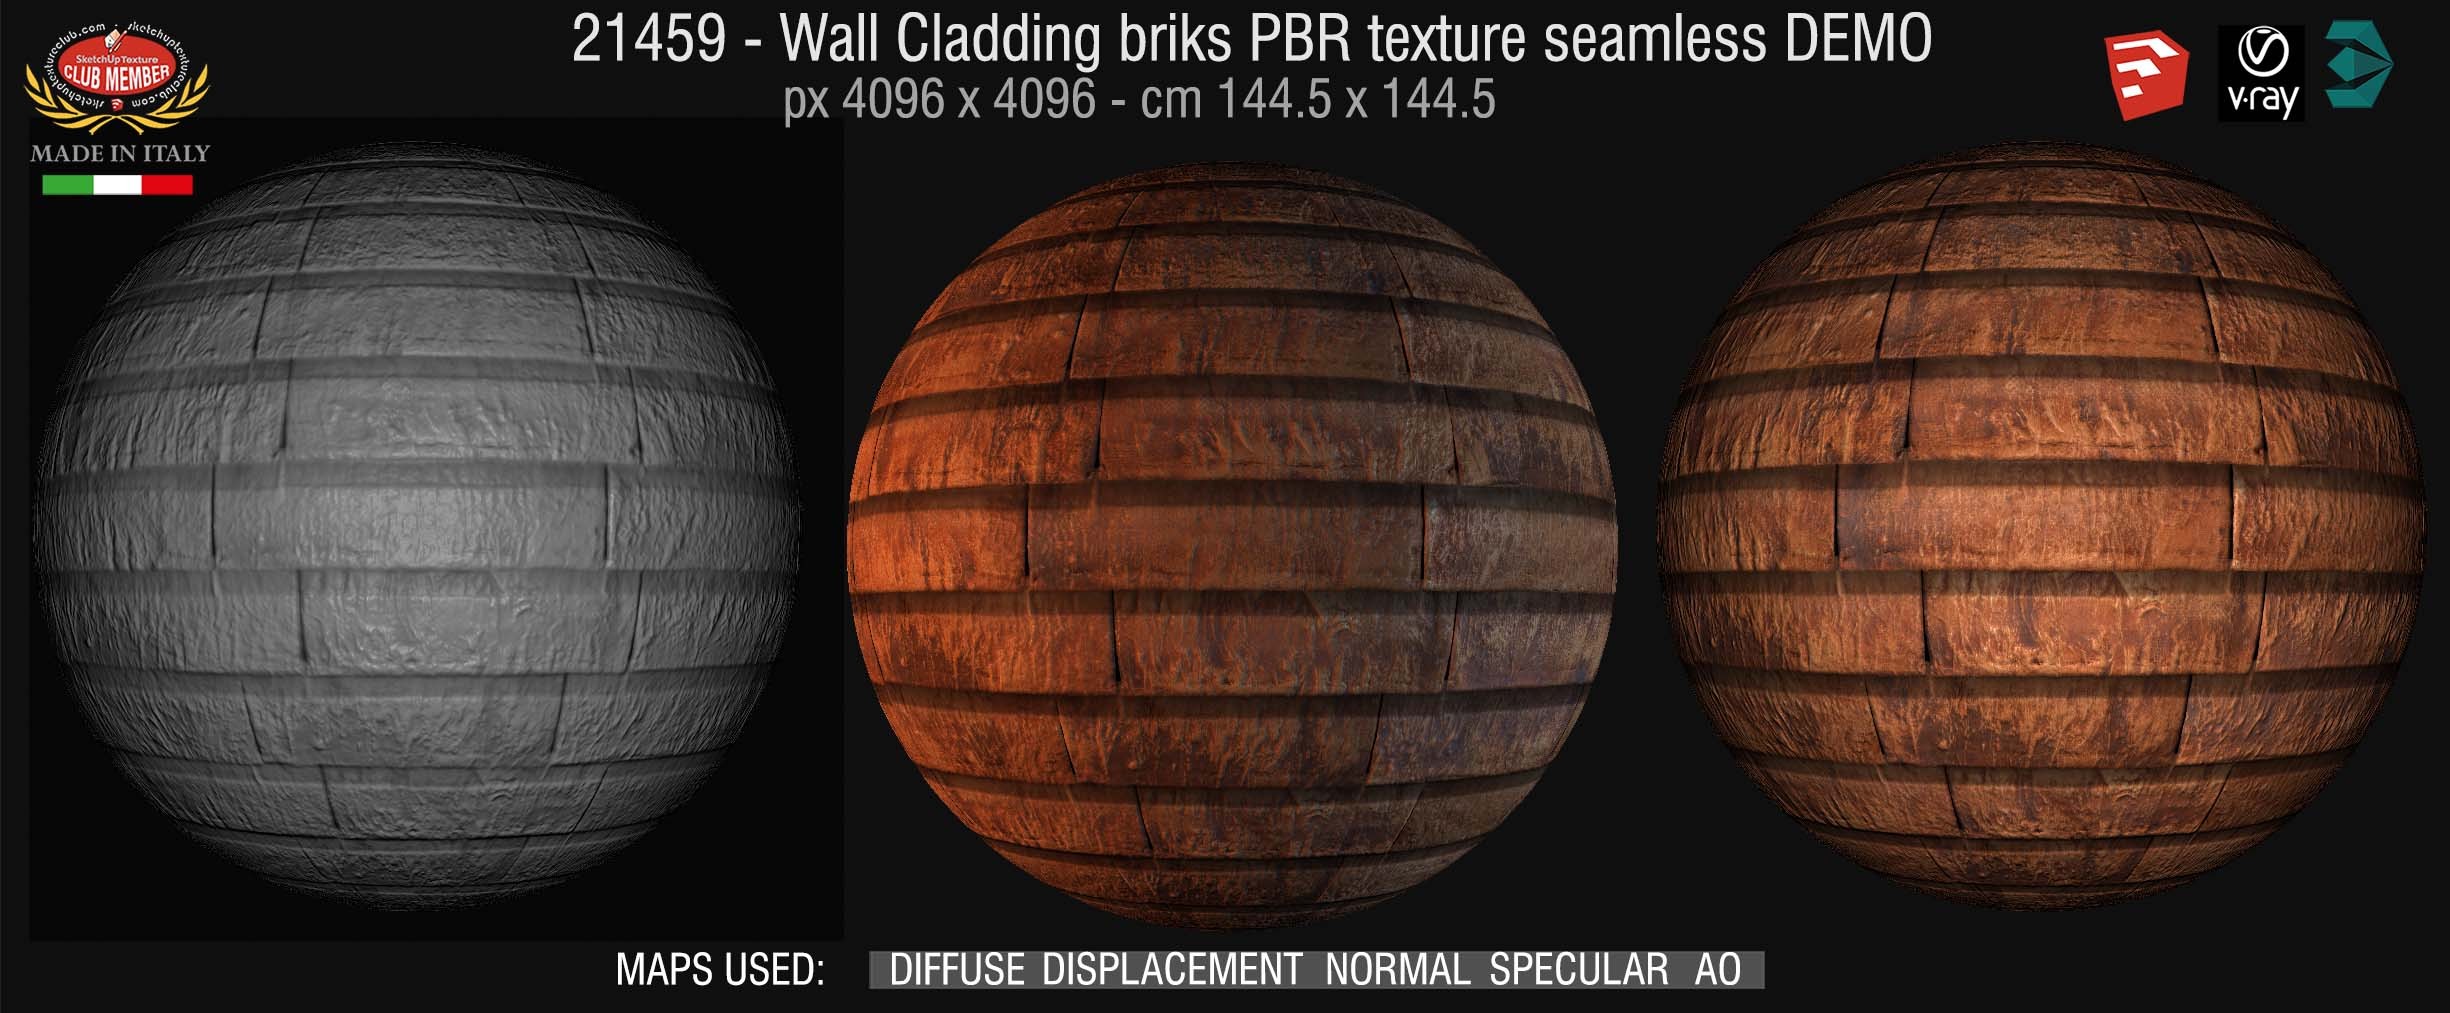 21459 Wall cladding bricks PBR texture seamless